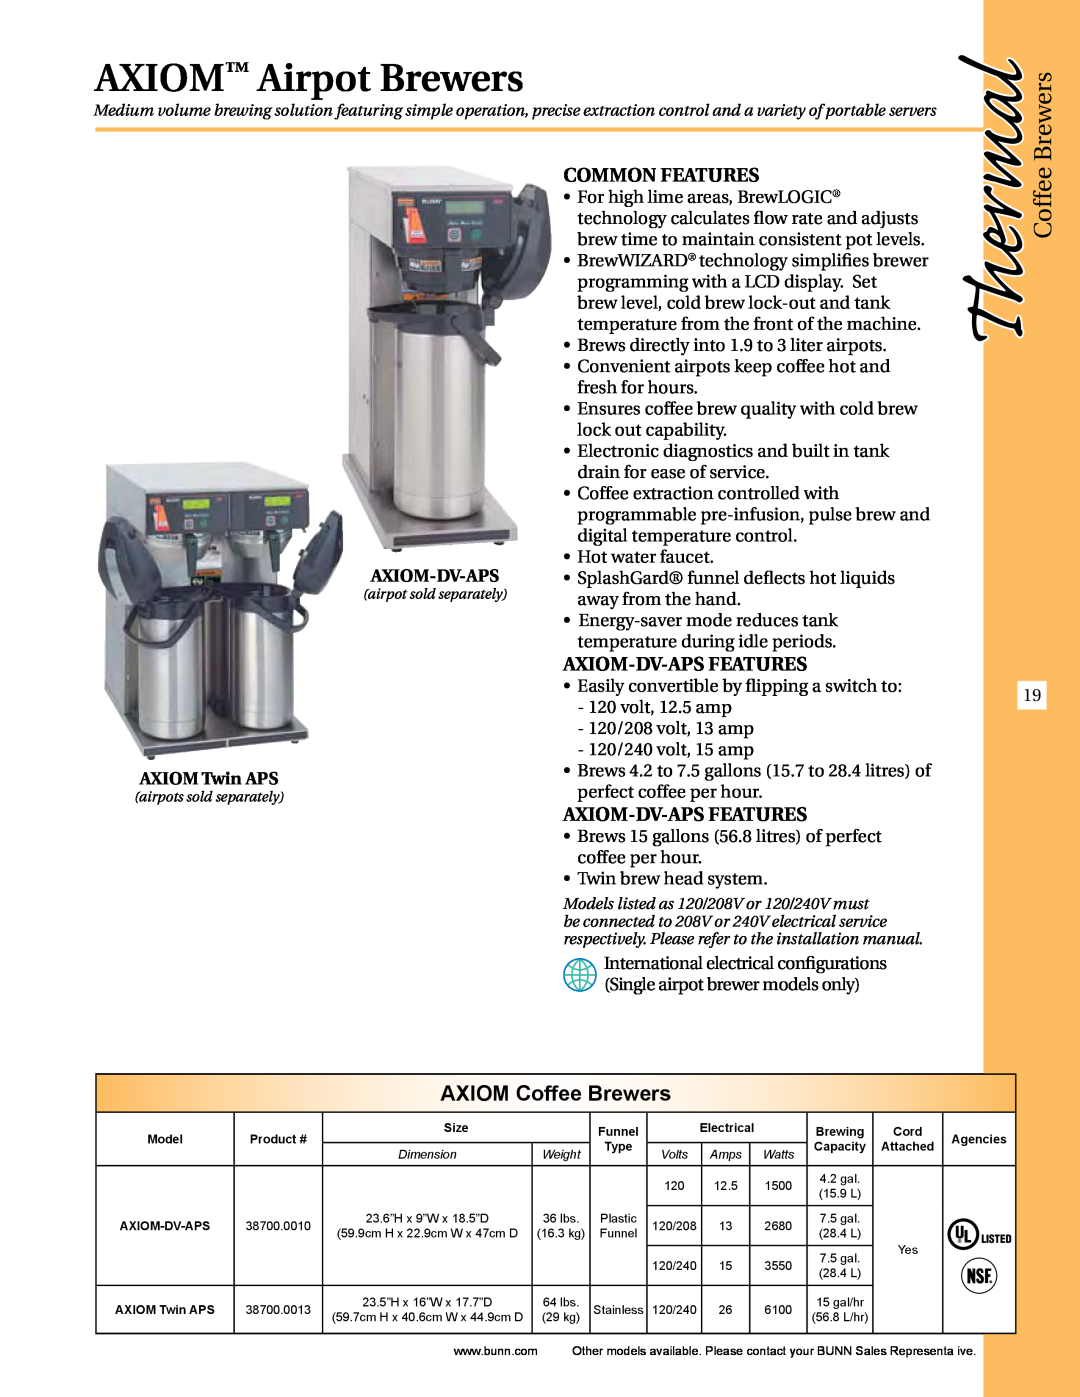 Thermal Comfort ICB-DV manual AXIOM Airpot Brewers, Axiom Coffee Brewers, Axiom-Dv-Aps Features, AXIOM Twin APS, Thermal 